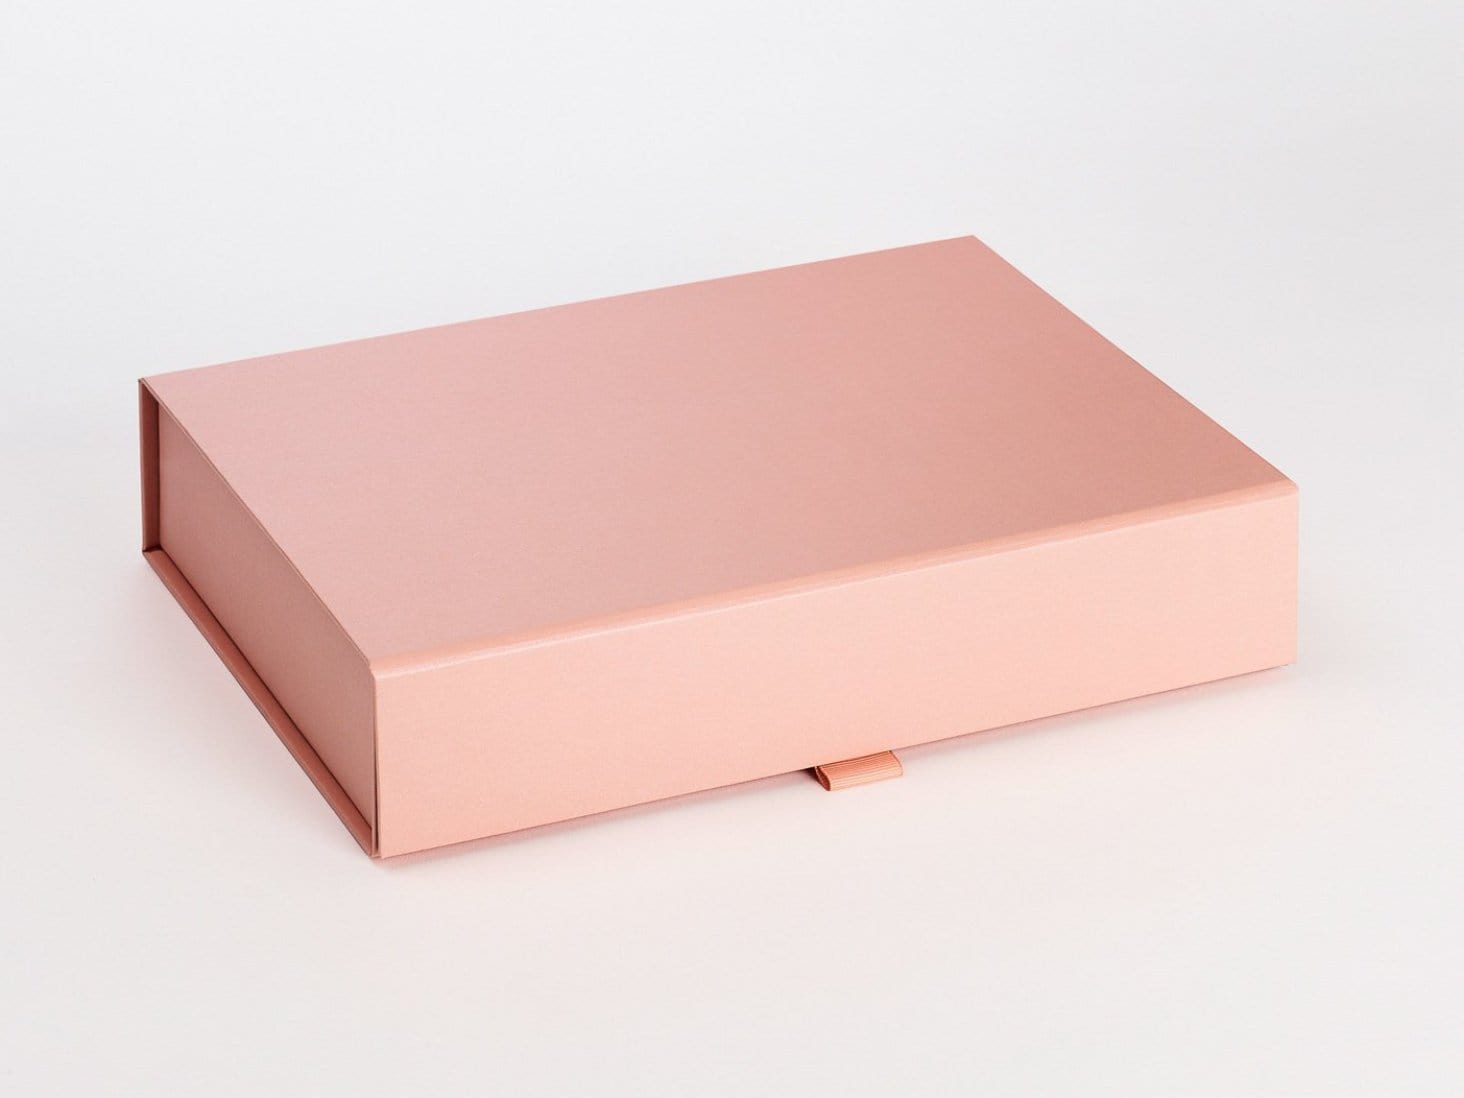 Rose Gold A4 Shallow Gift Box Sample with Ribbon Tab